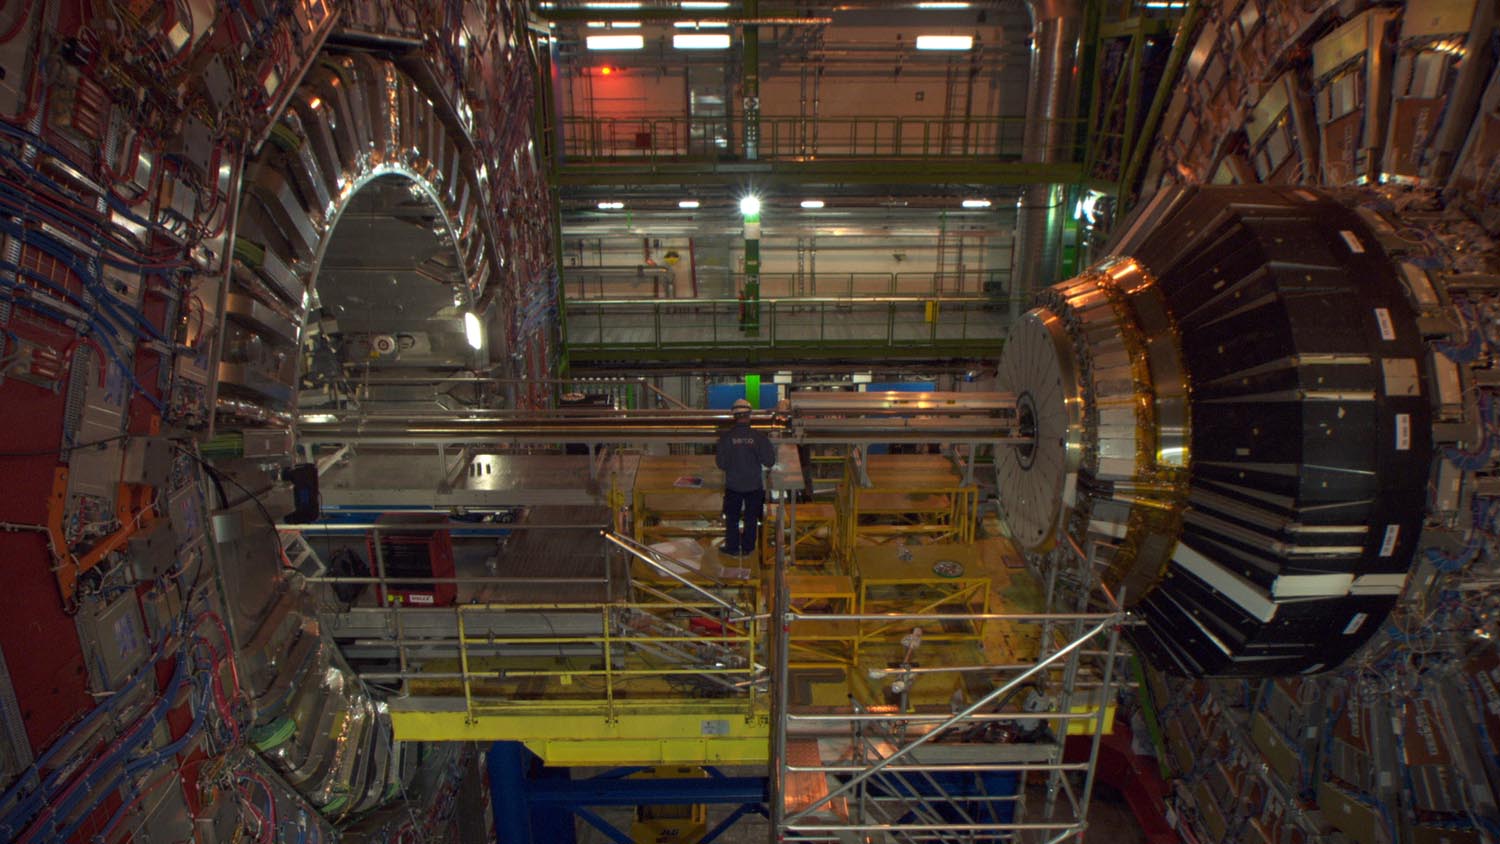 "CERN (Film)" by Nikolaus Geyrhalter Filmproduktion - Own work. Licensed under CC BY-SA 4.0 via Wikimedia Commons.